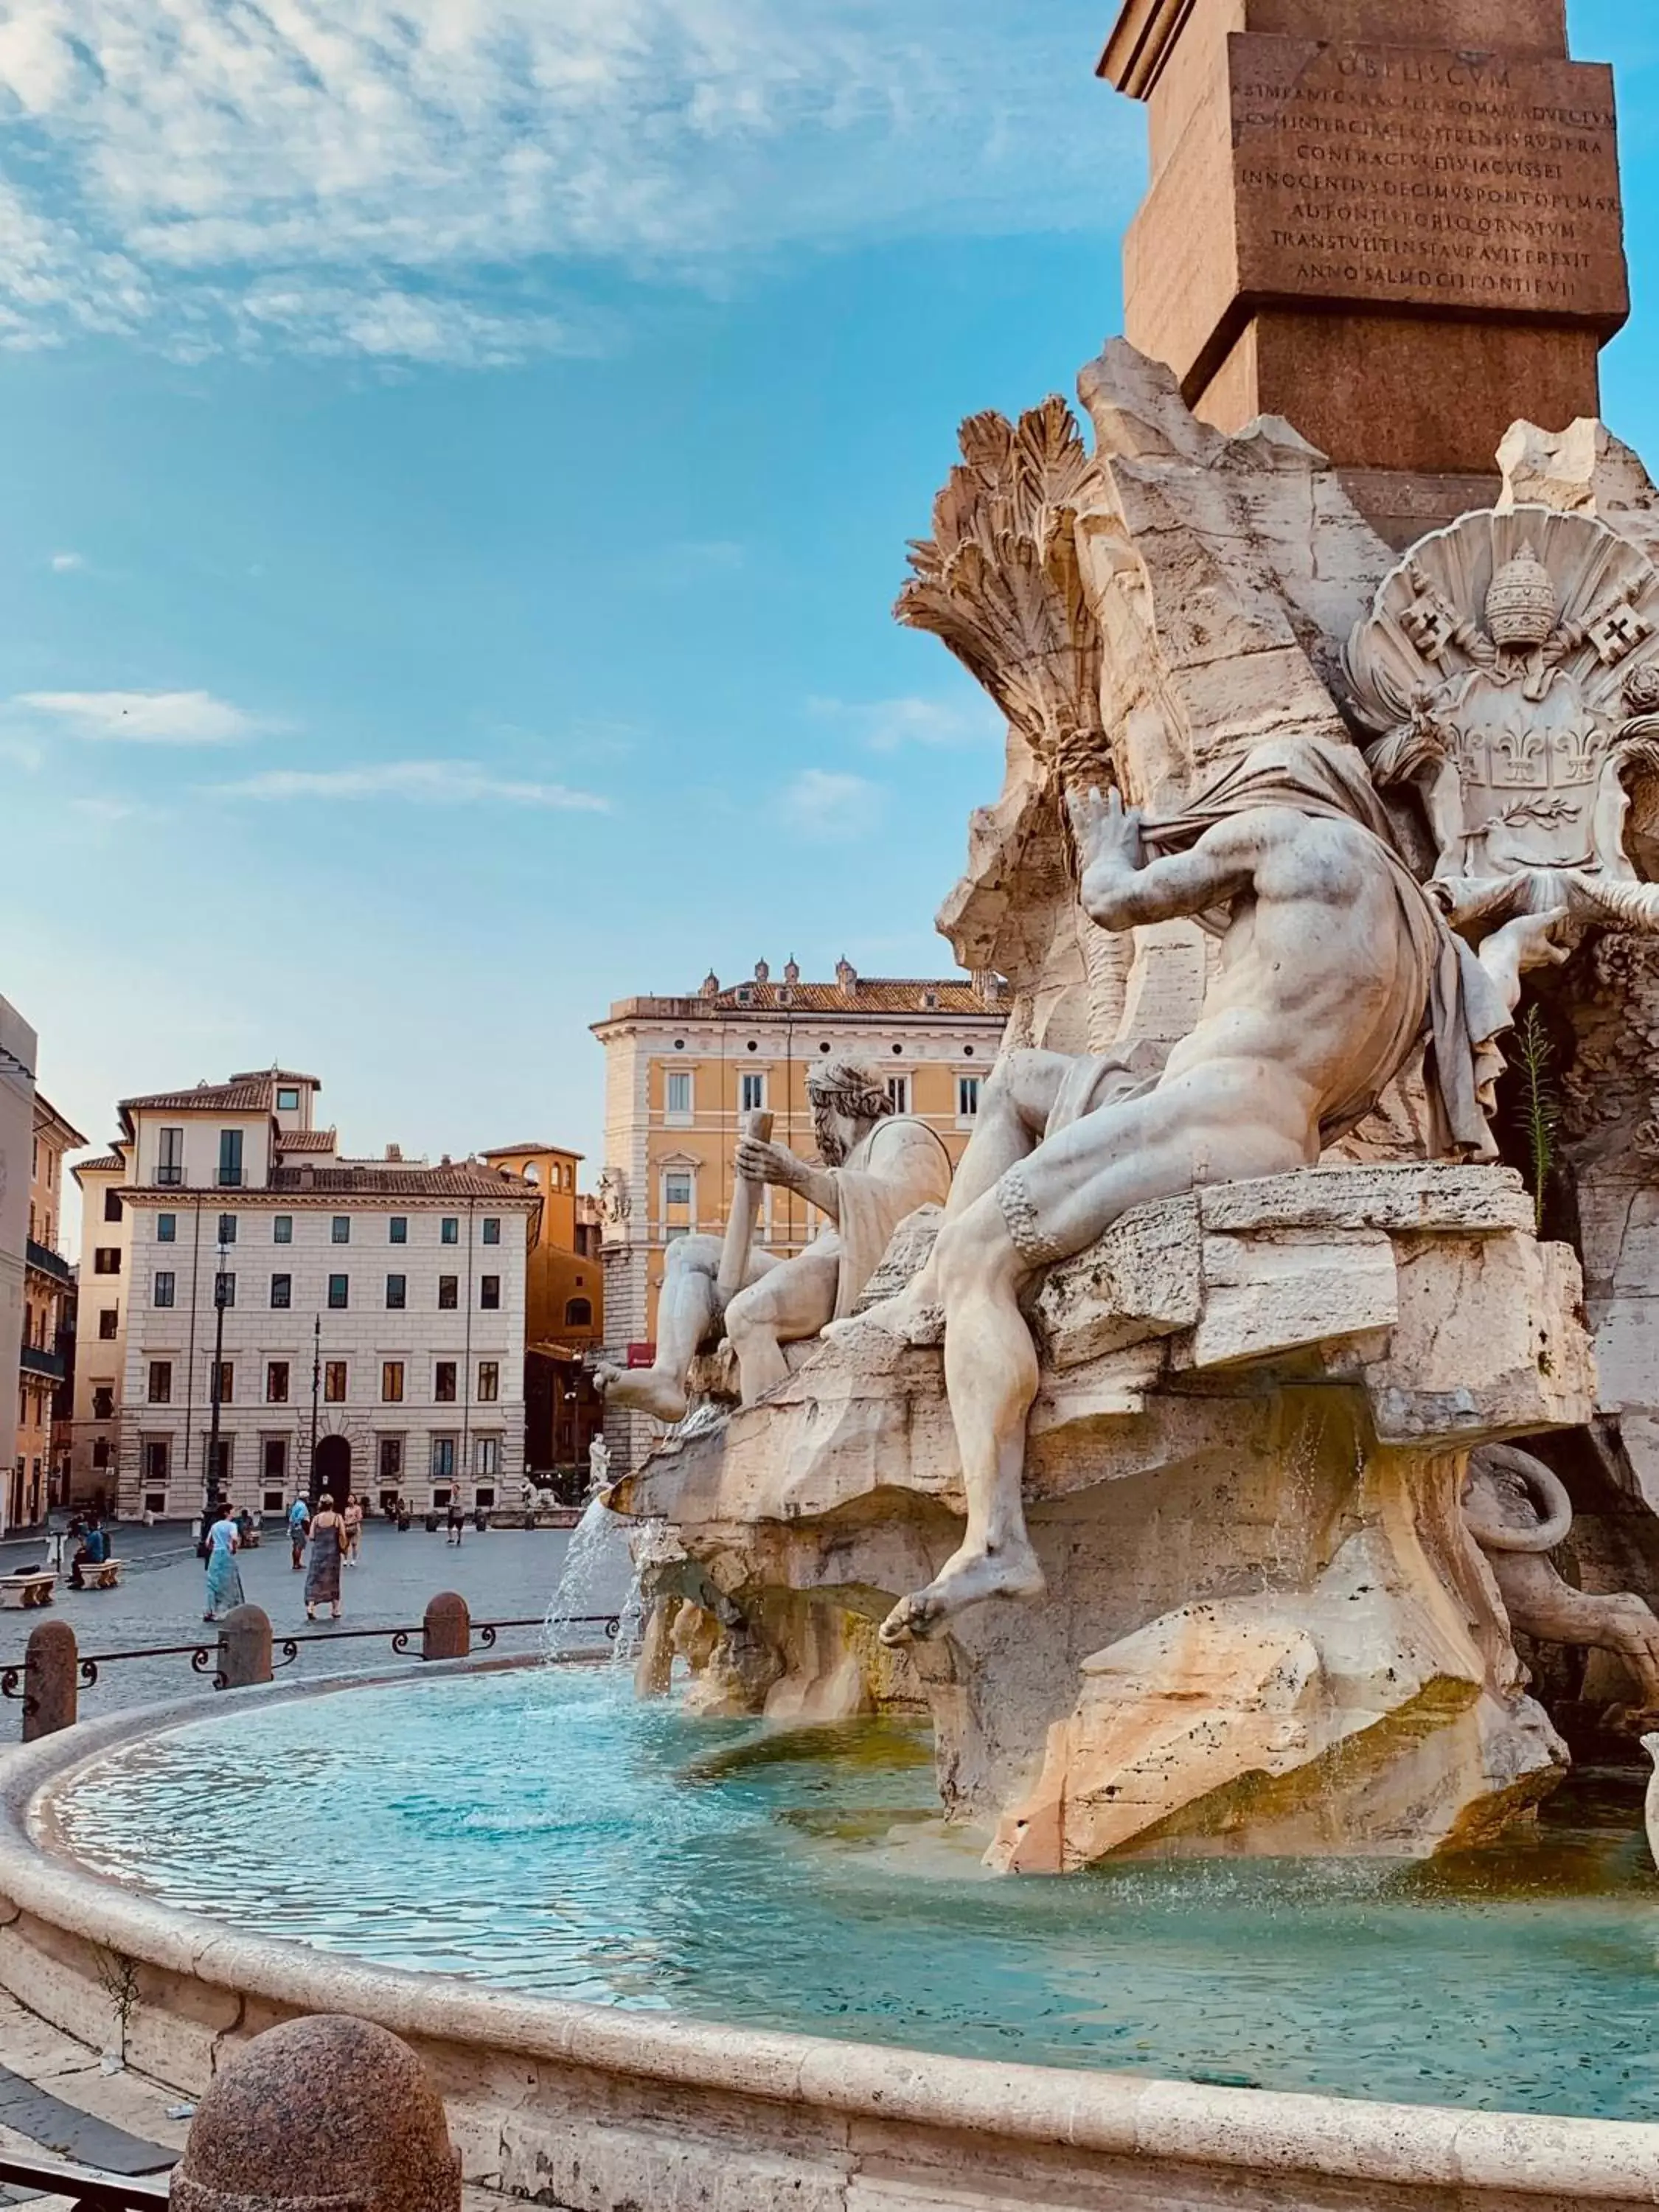 Nearby landmark in 900 Piazza del Popolo